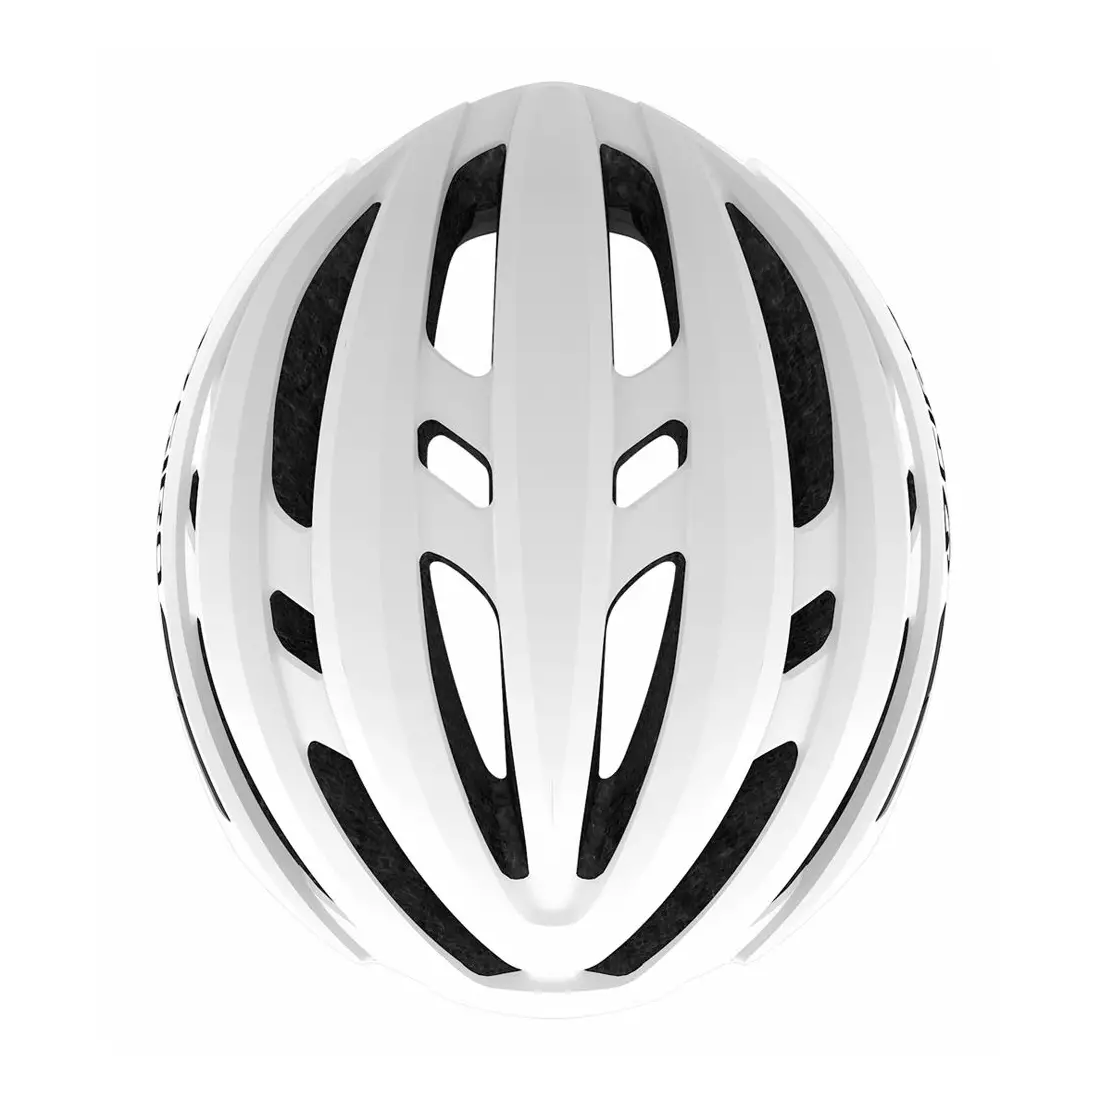 GIRO AGILIS INTEGRATED MIPS helma na silniční kolo, matte white